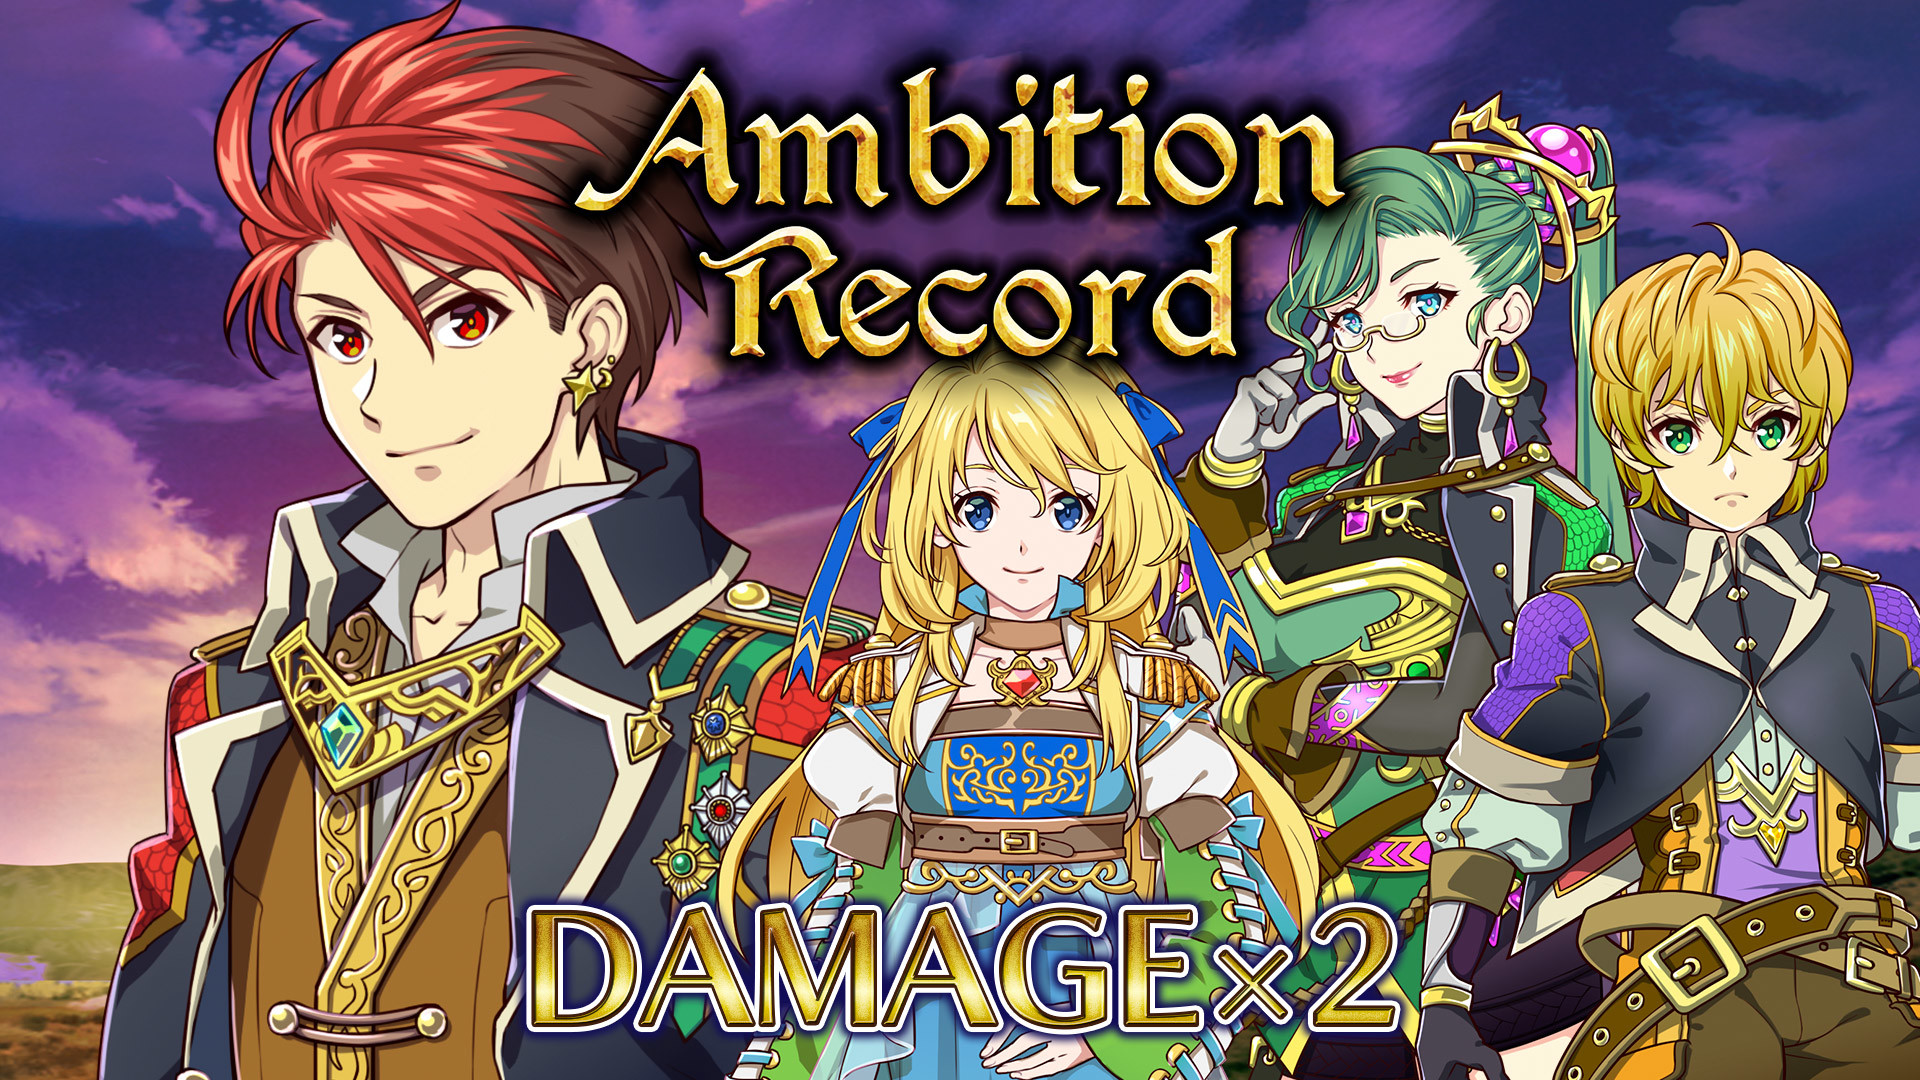 Damage x2 - Ambition Record Featured Screenshot #1